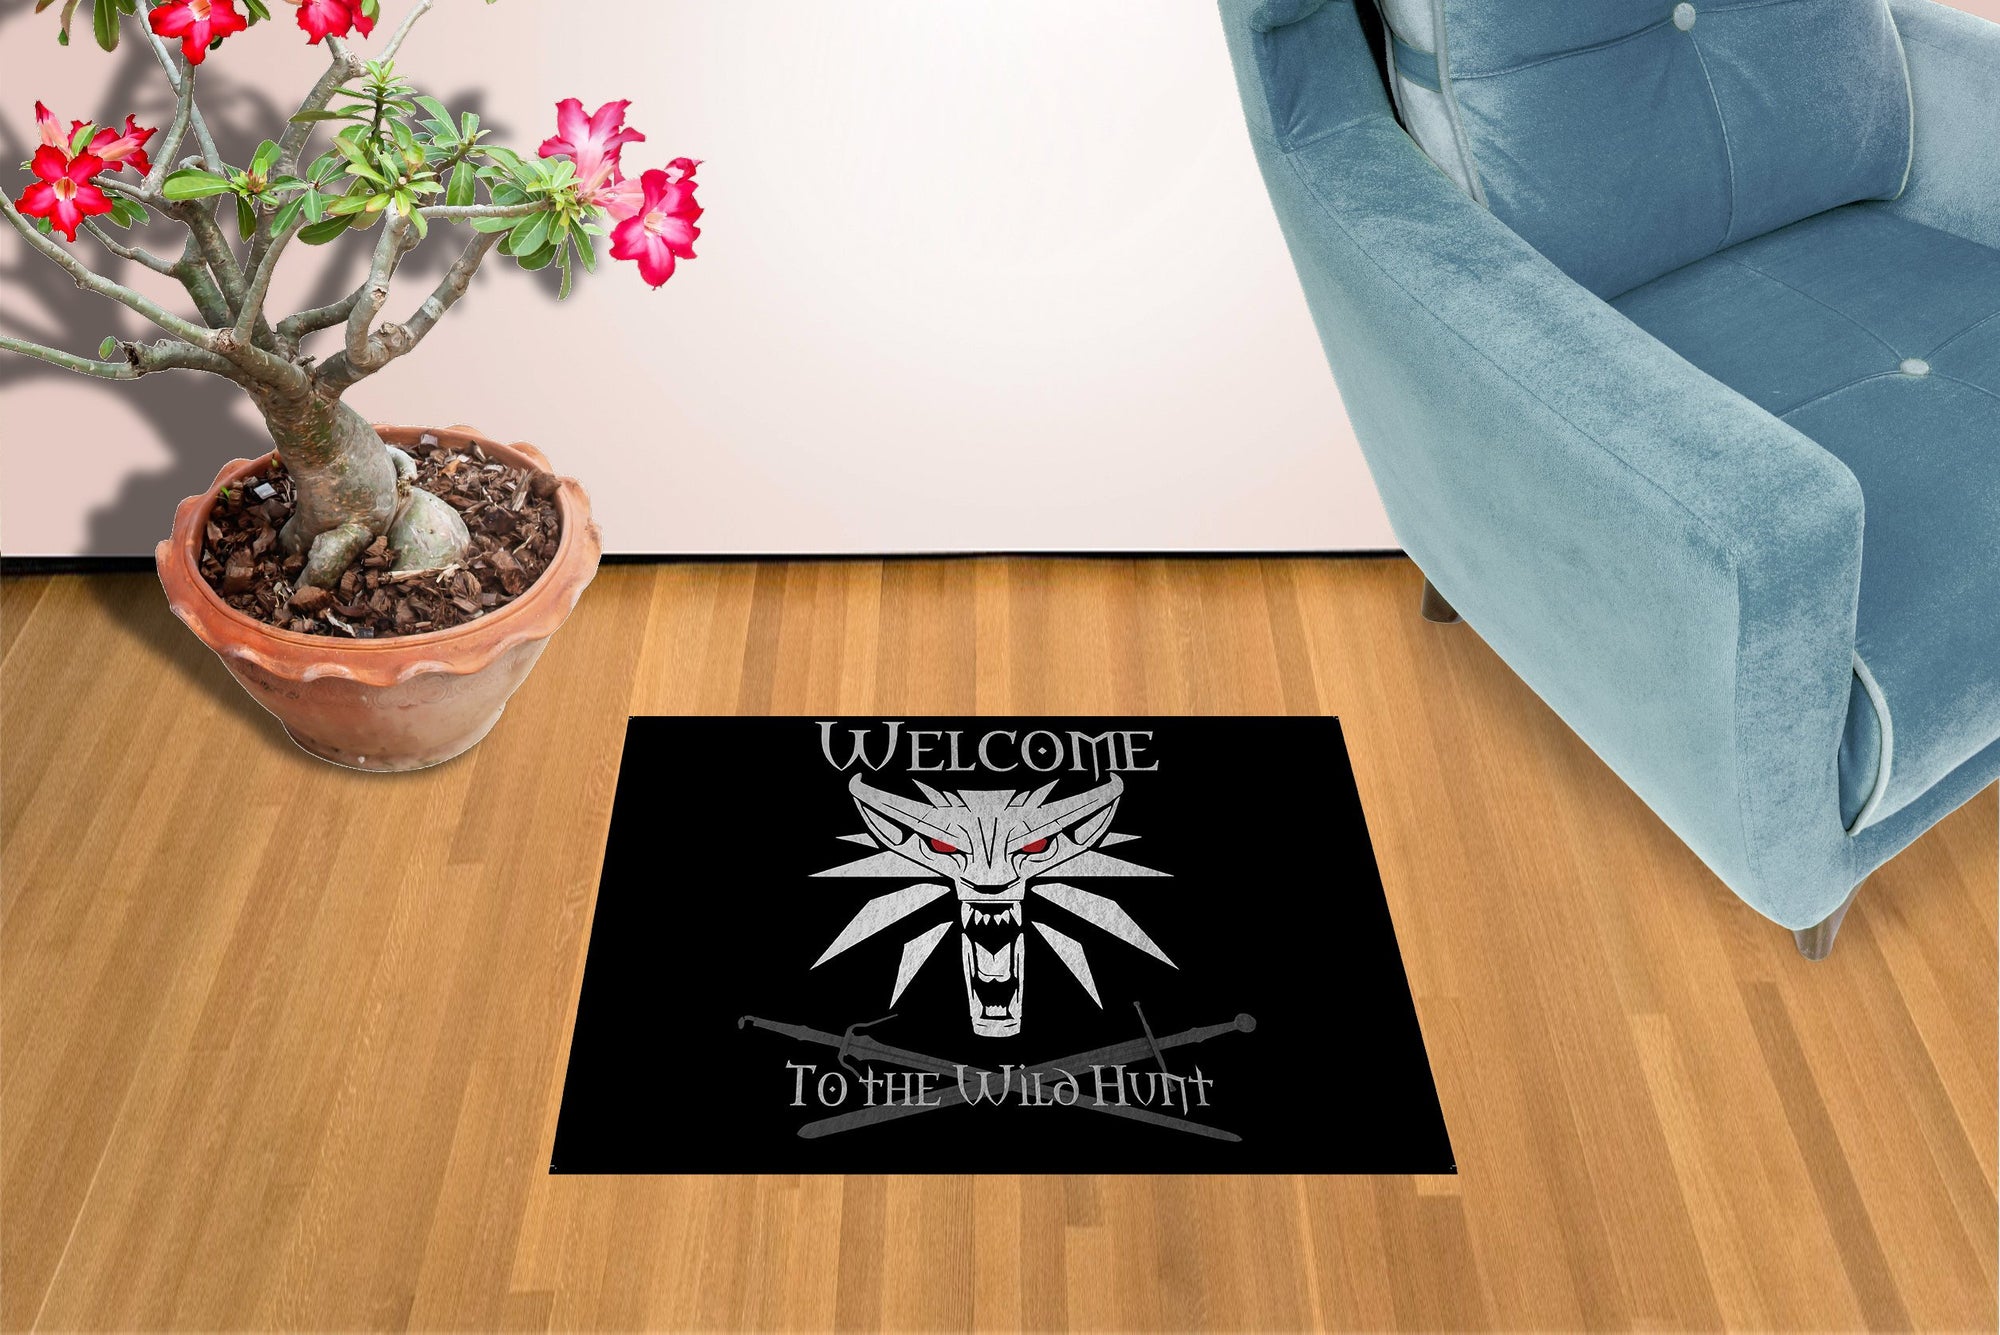 The Witcher - Welcome to the Wild Hunt 24&quot; x 36&quot; Doormat Welcome Floormat